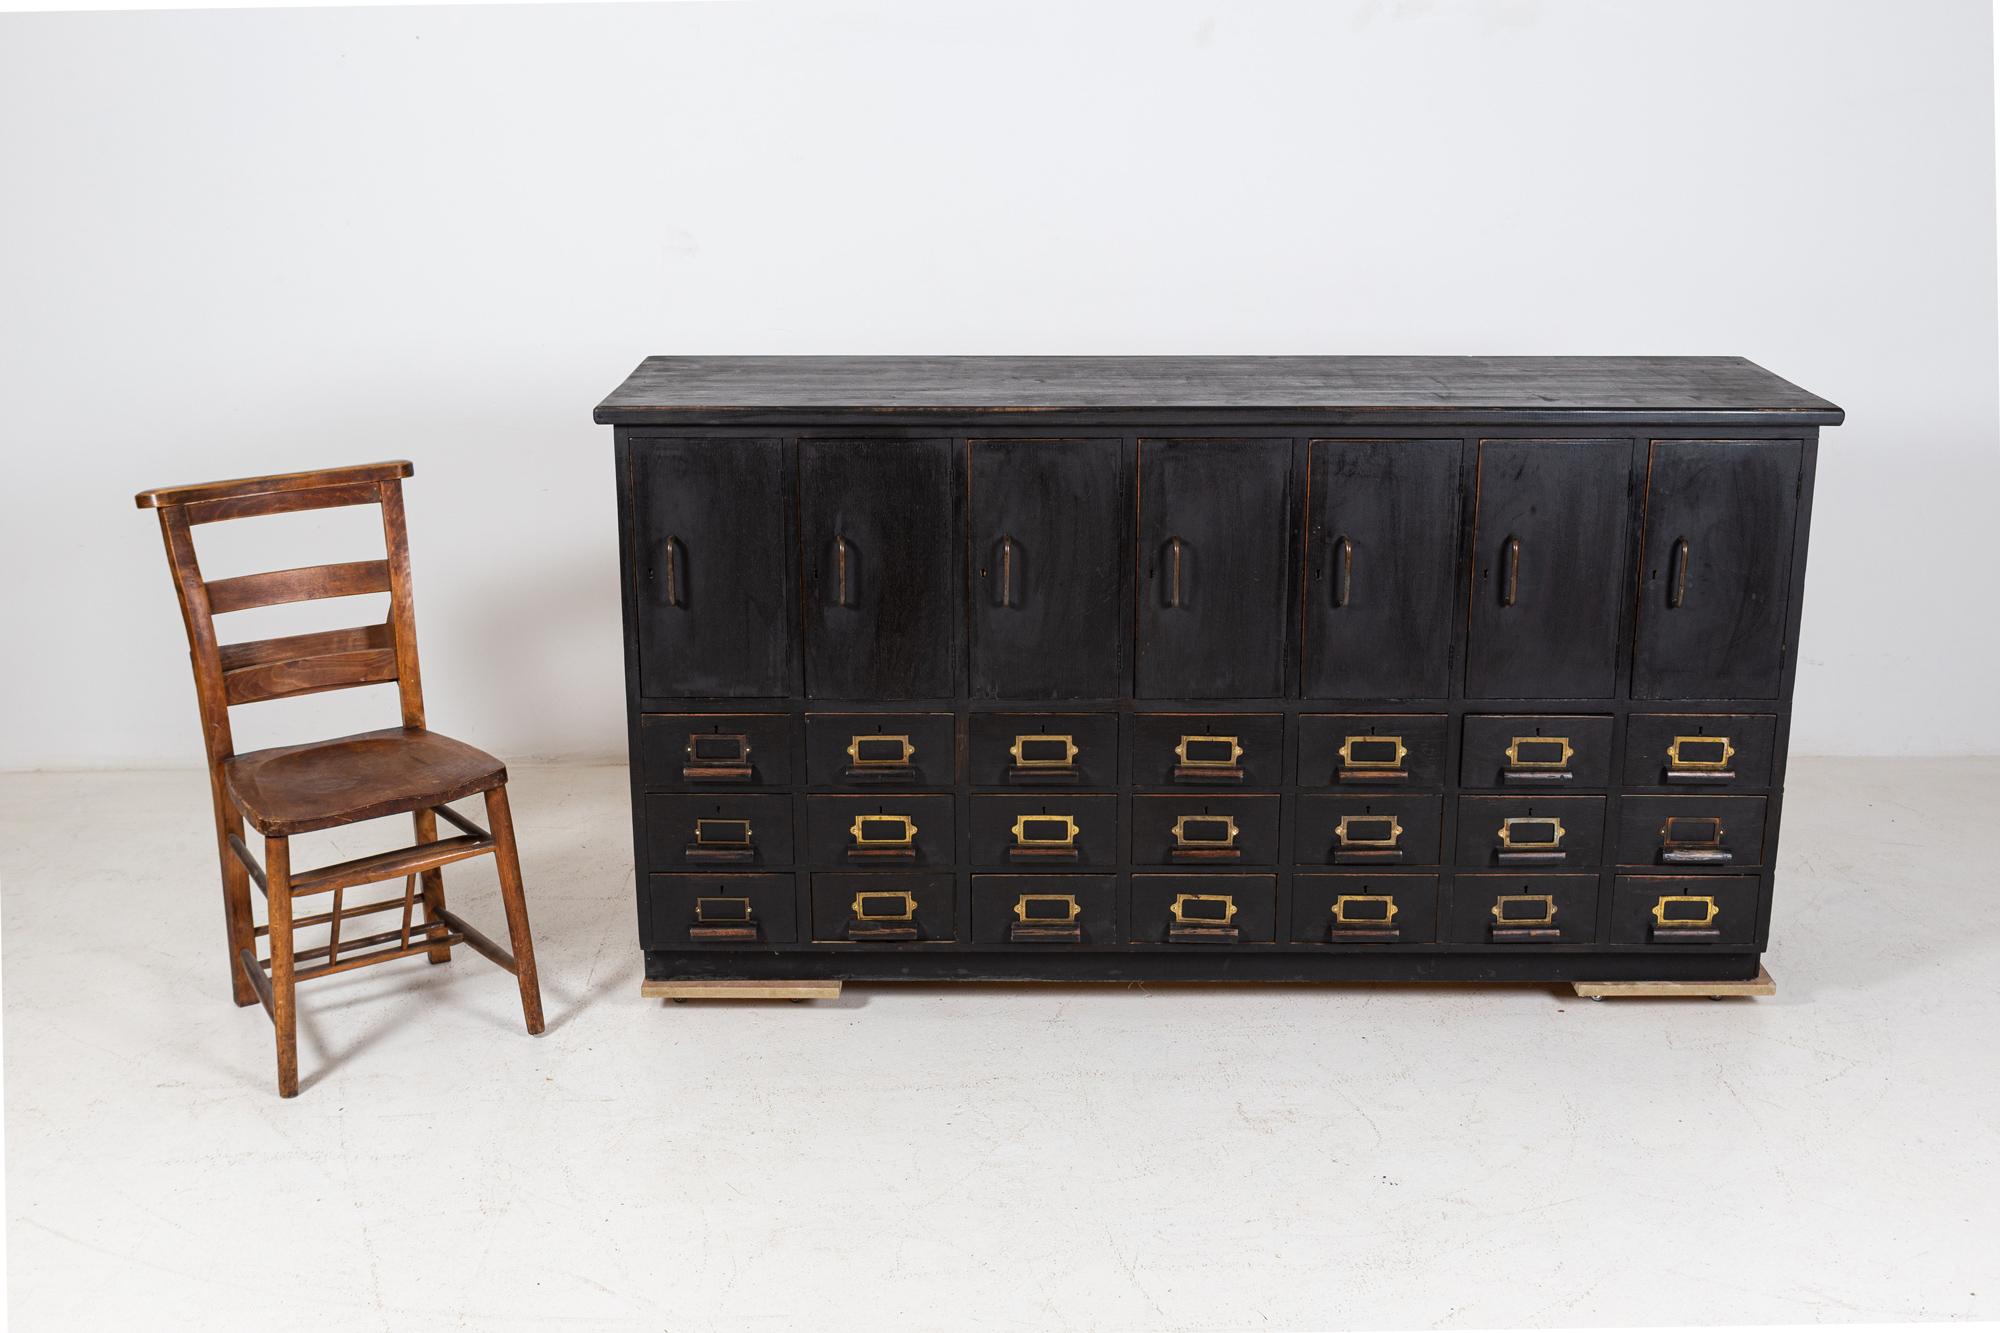 Circa. 1940-50's

Large ebonised English oak panelled locker cabinet

Measures: W 170 x D 49 x H 91 cm.
 
 